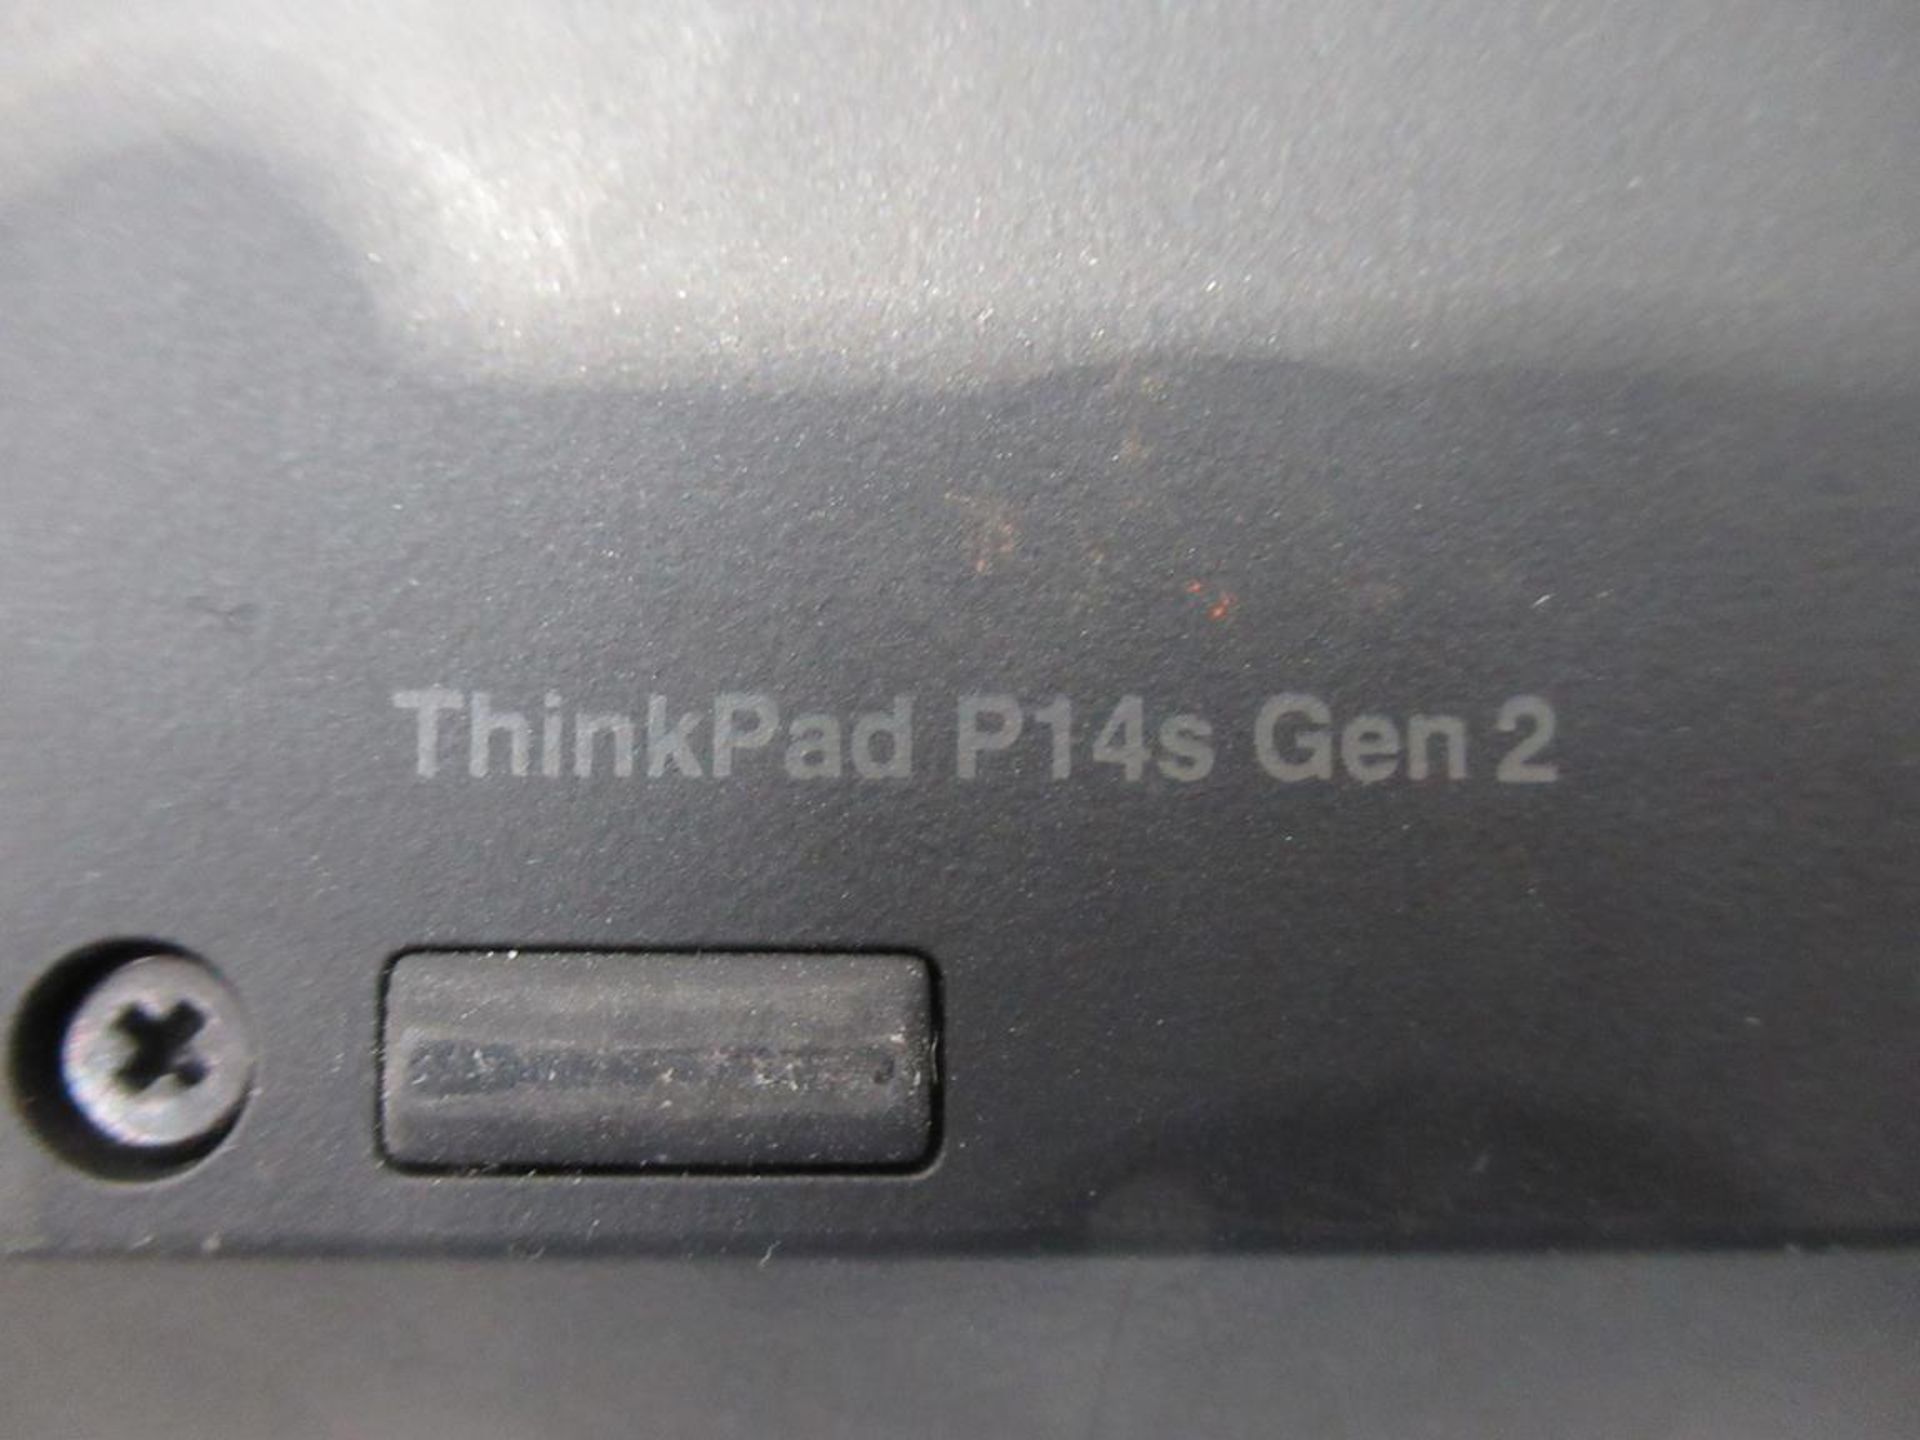 ThinkPad, P14s Gen 2 standard specification - Image 3 of 6